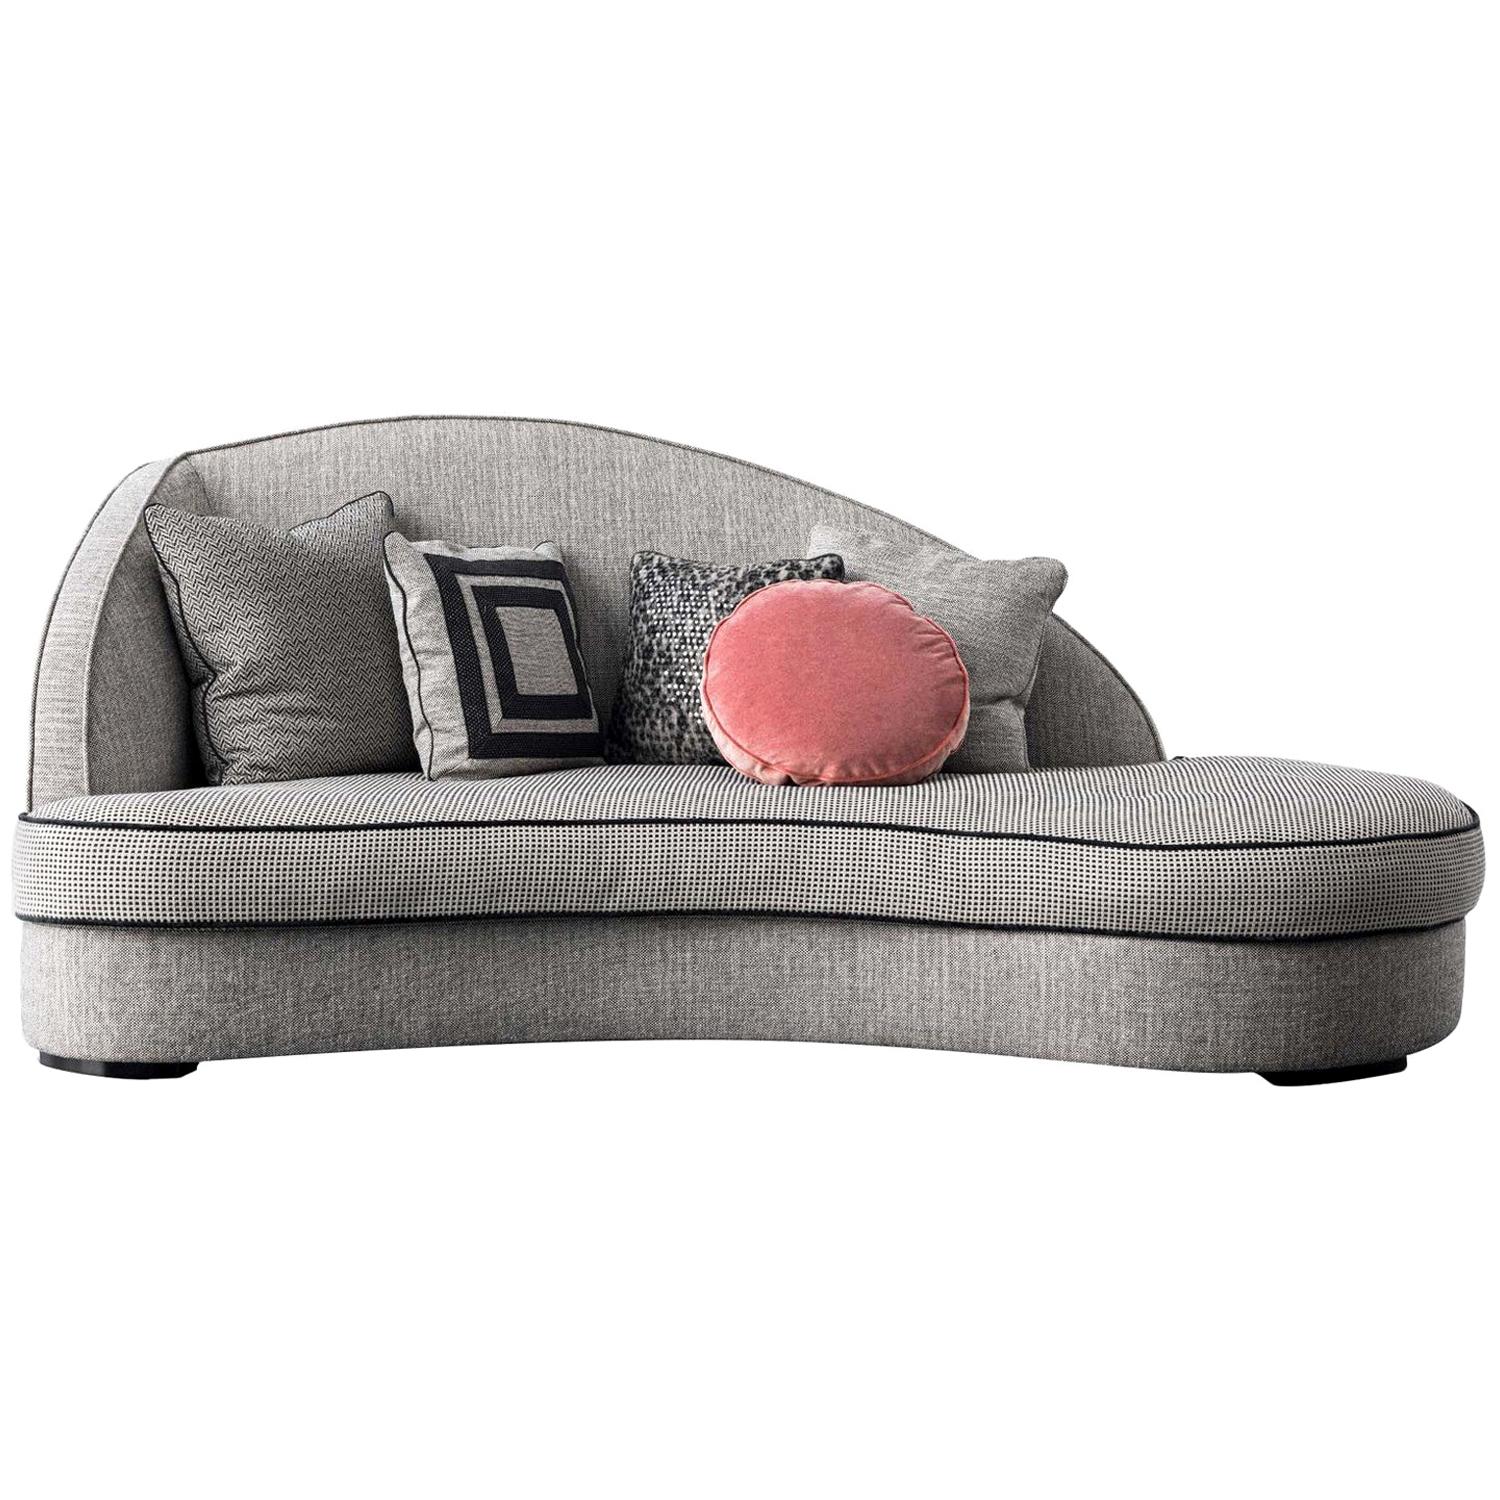 George 3-sitziges sofa by Chiara Provasi